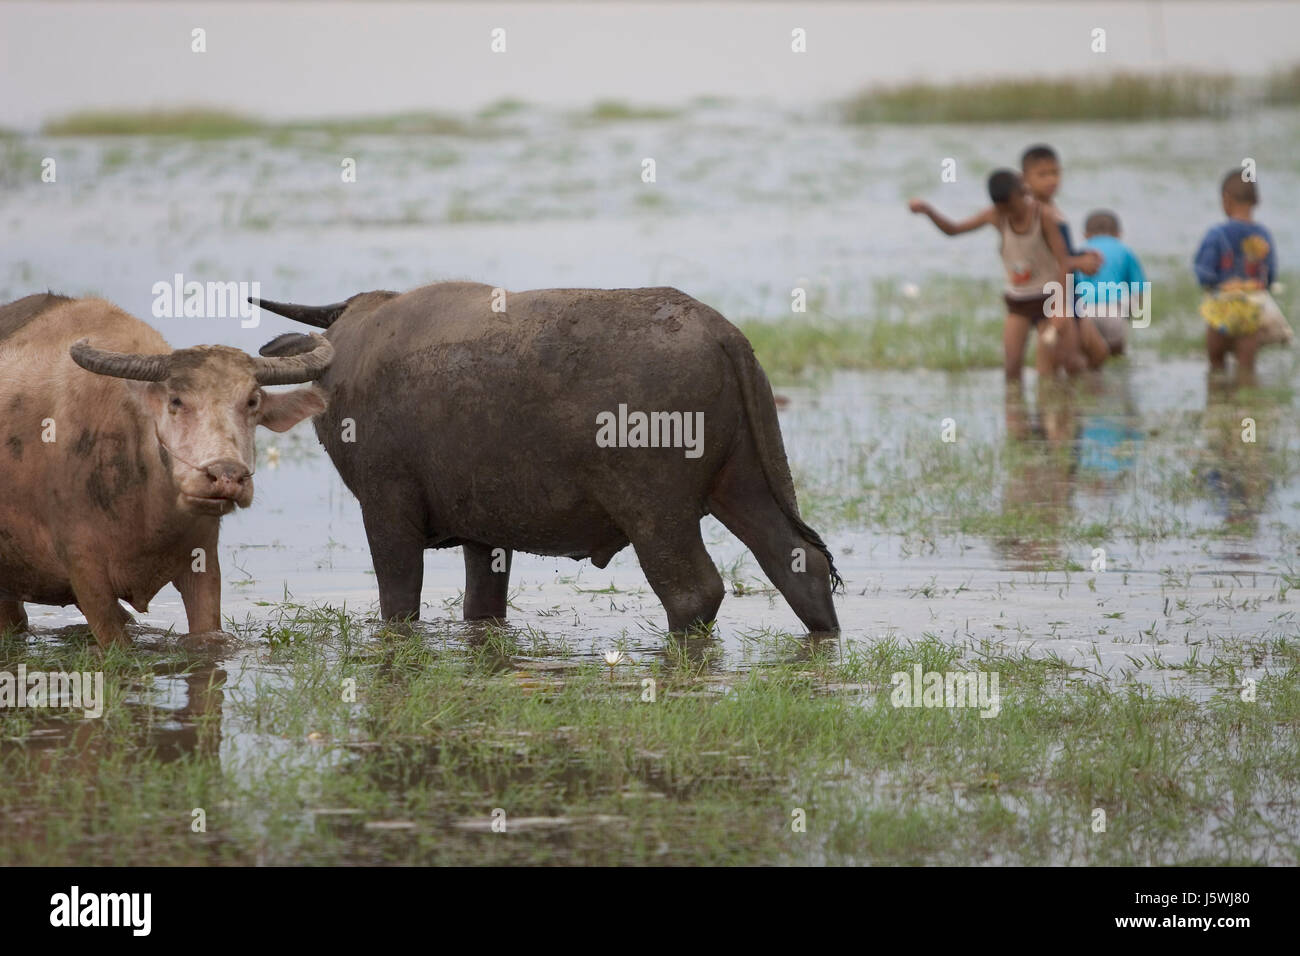 animal asia strong quadruped thailand bovine farm animal cattle hoofed animal Stock Photo